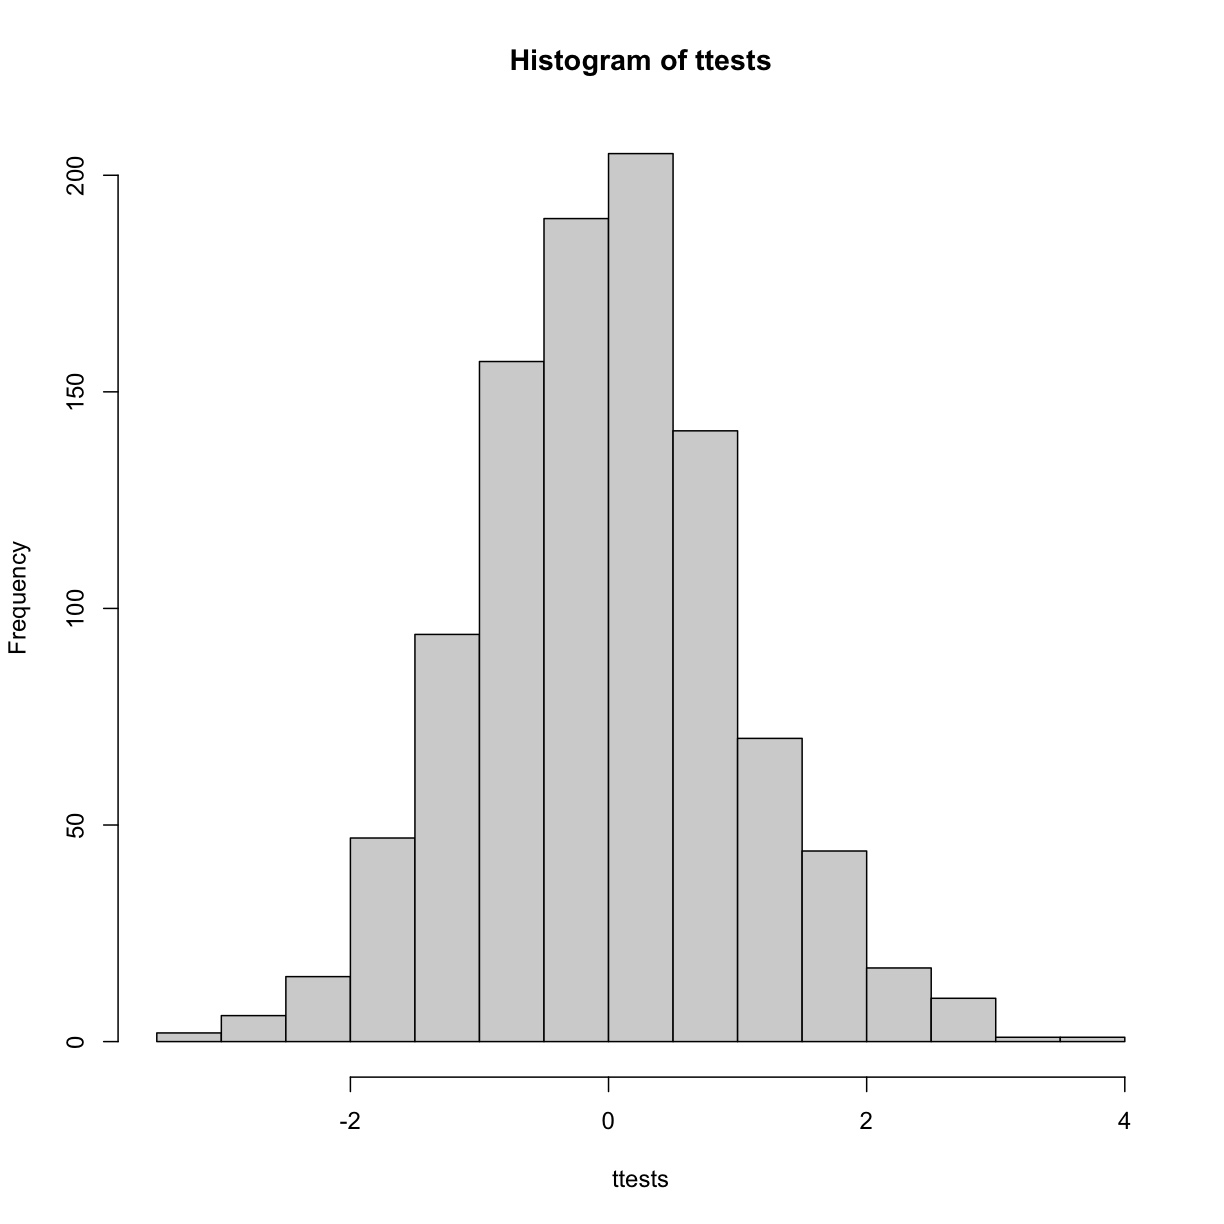 Histogram of 1000 Monte Carlo simulated t-statistics.